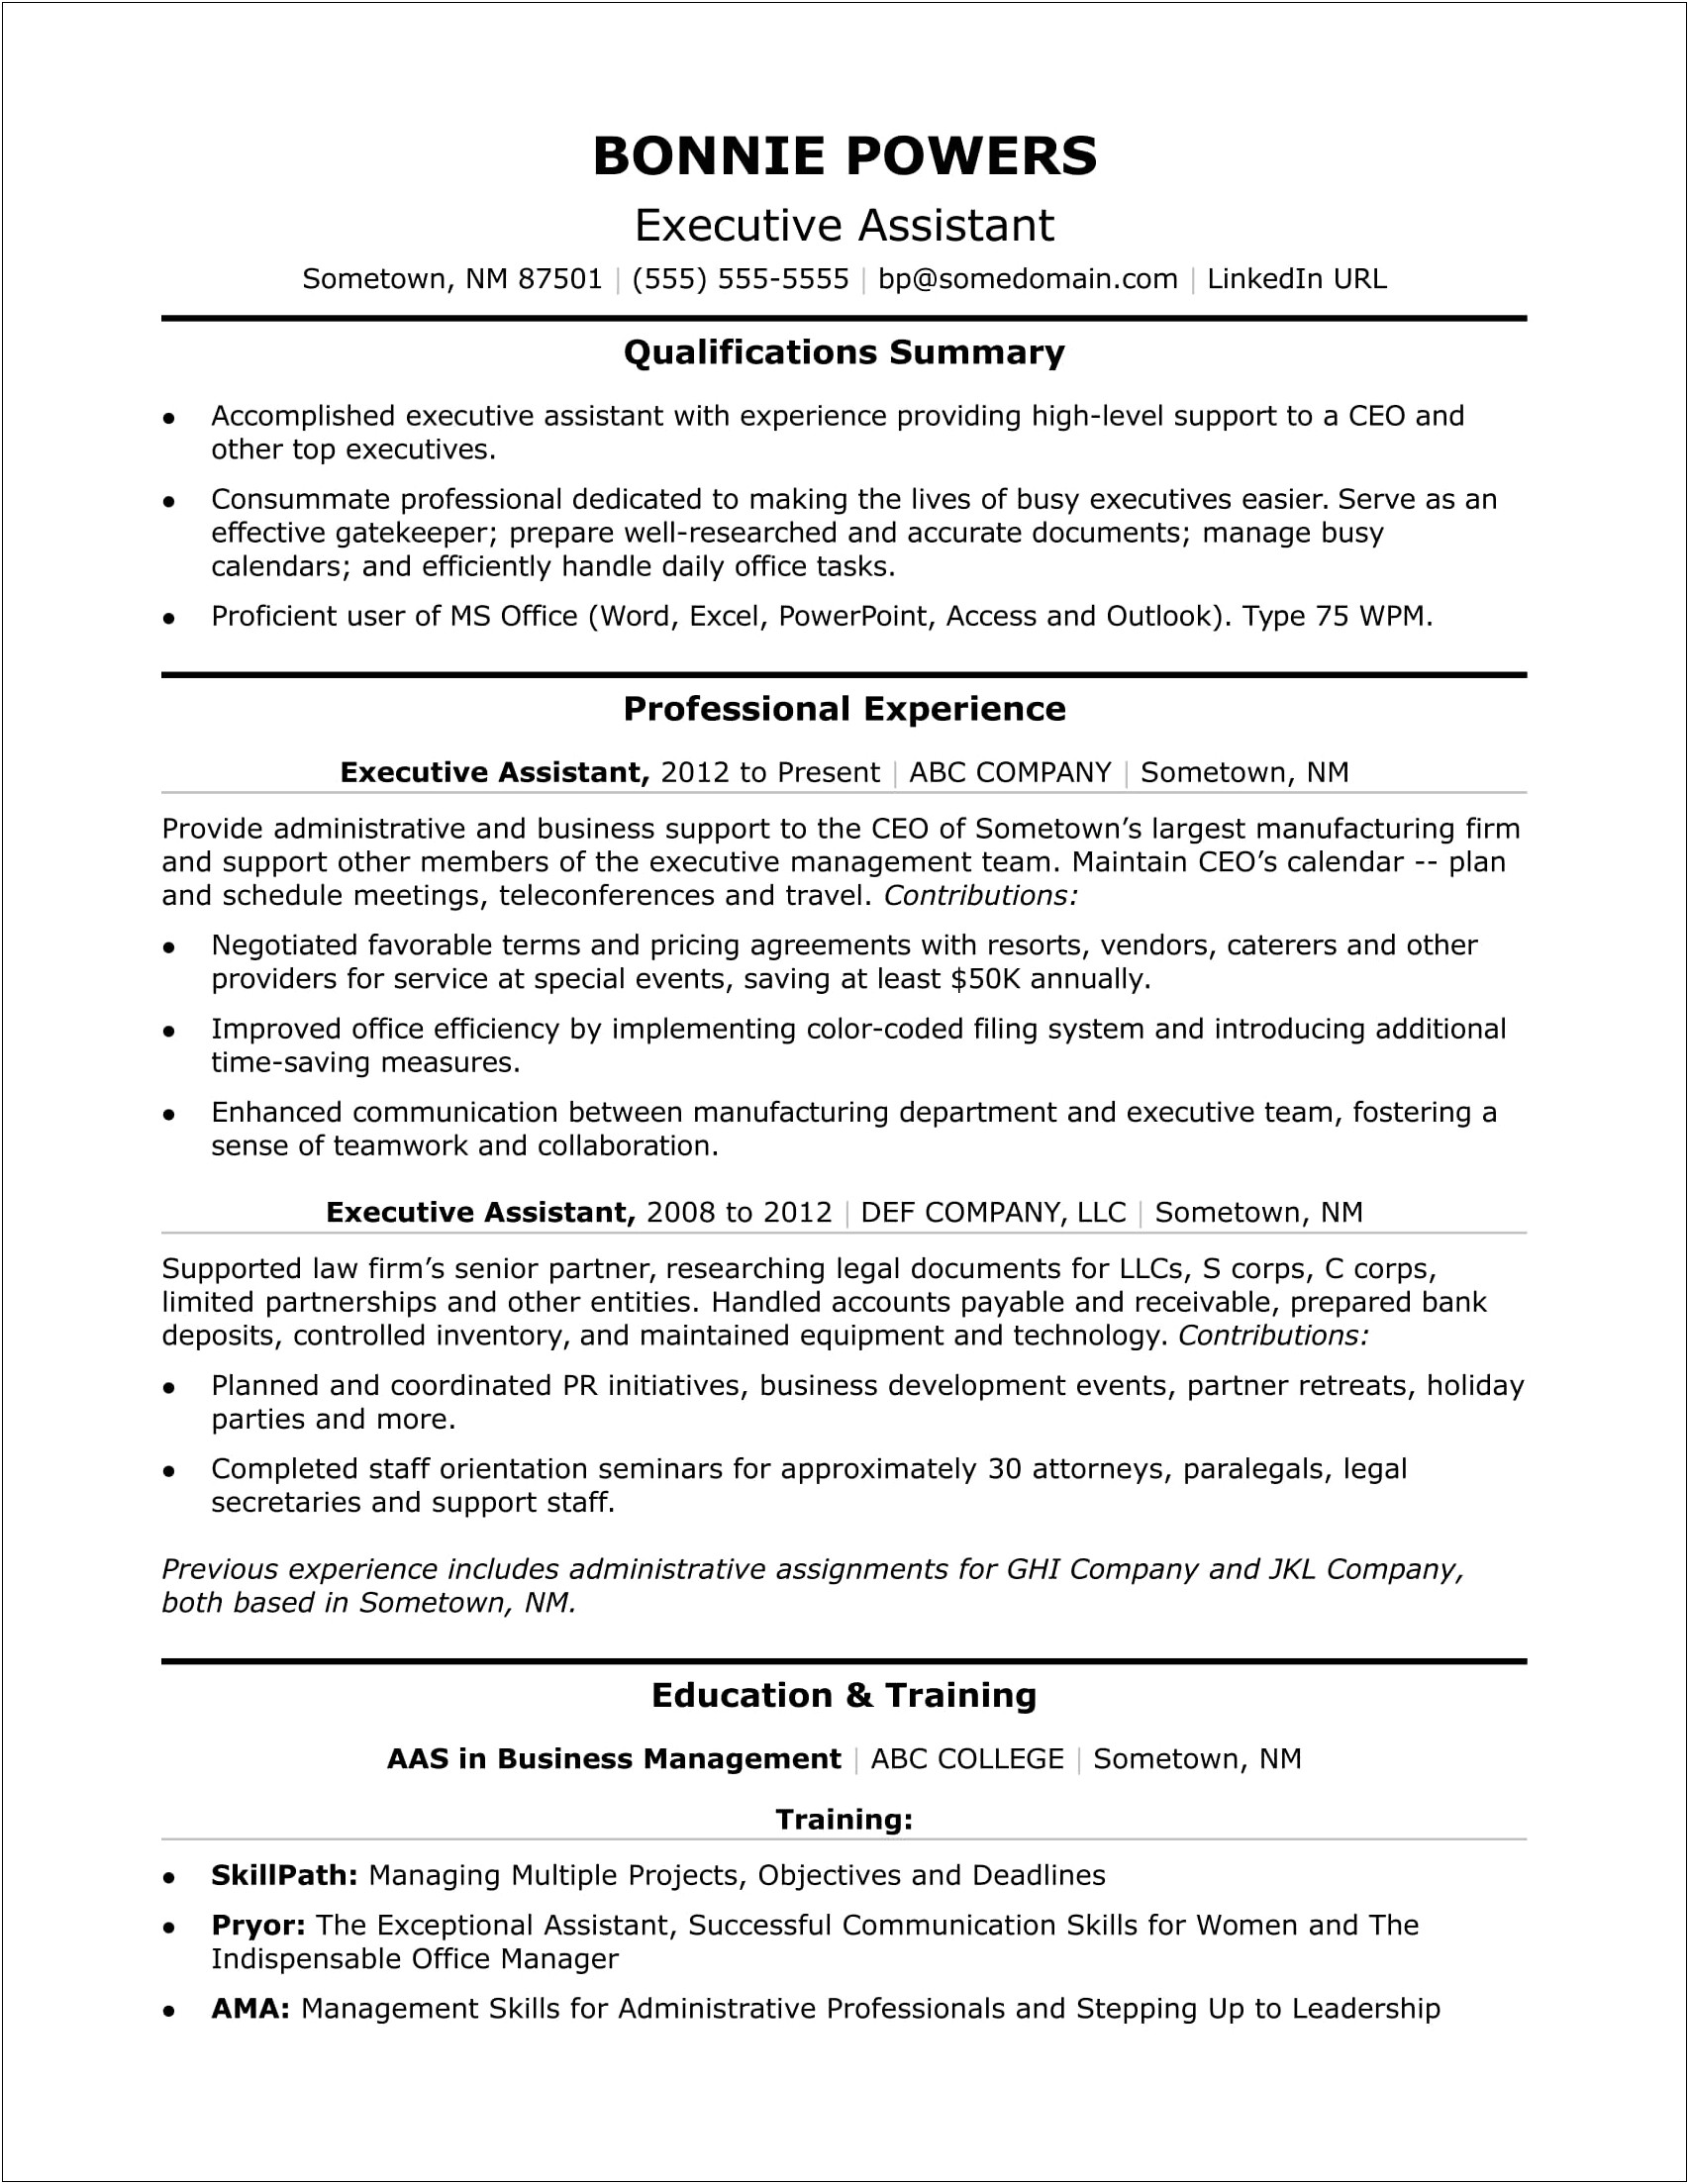 Legal Secretary Resume Computer Skills